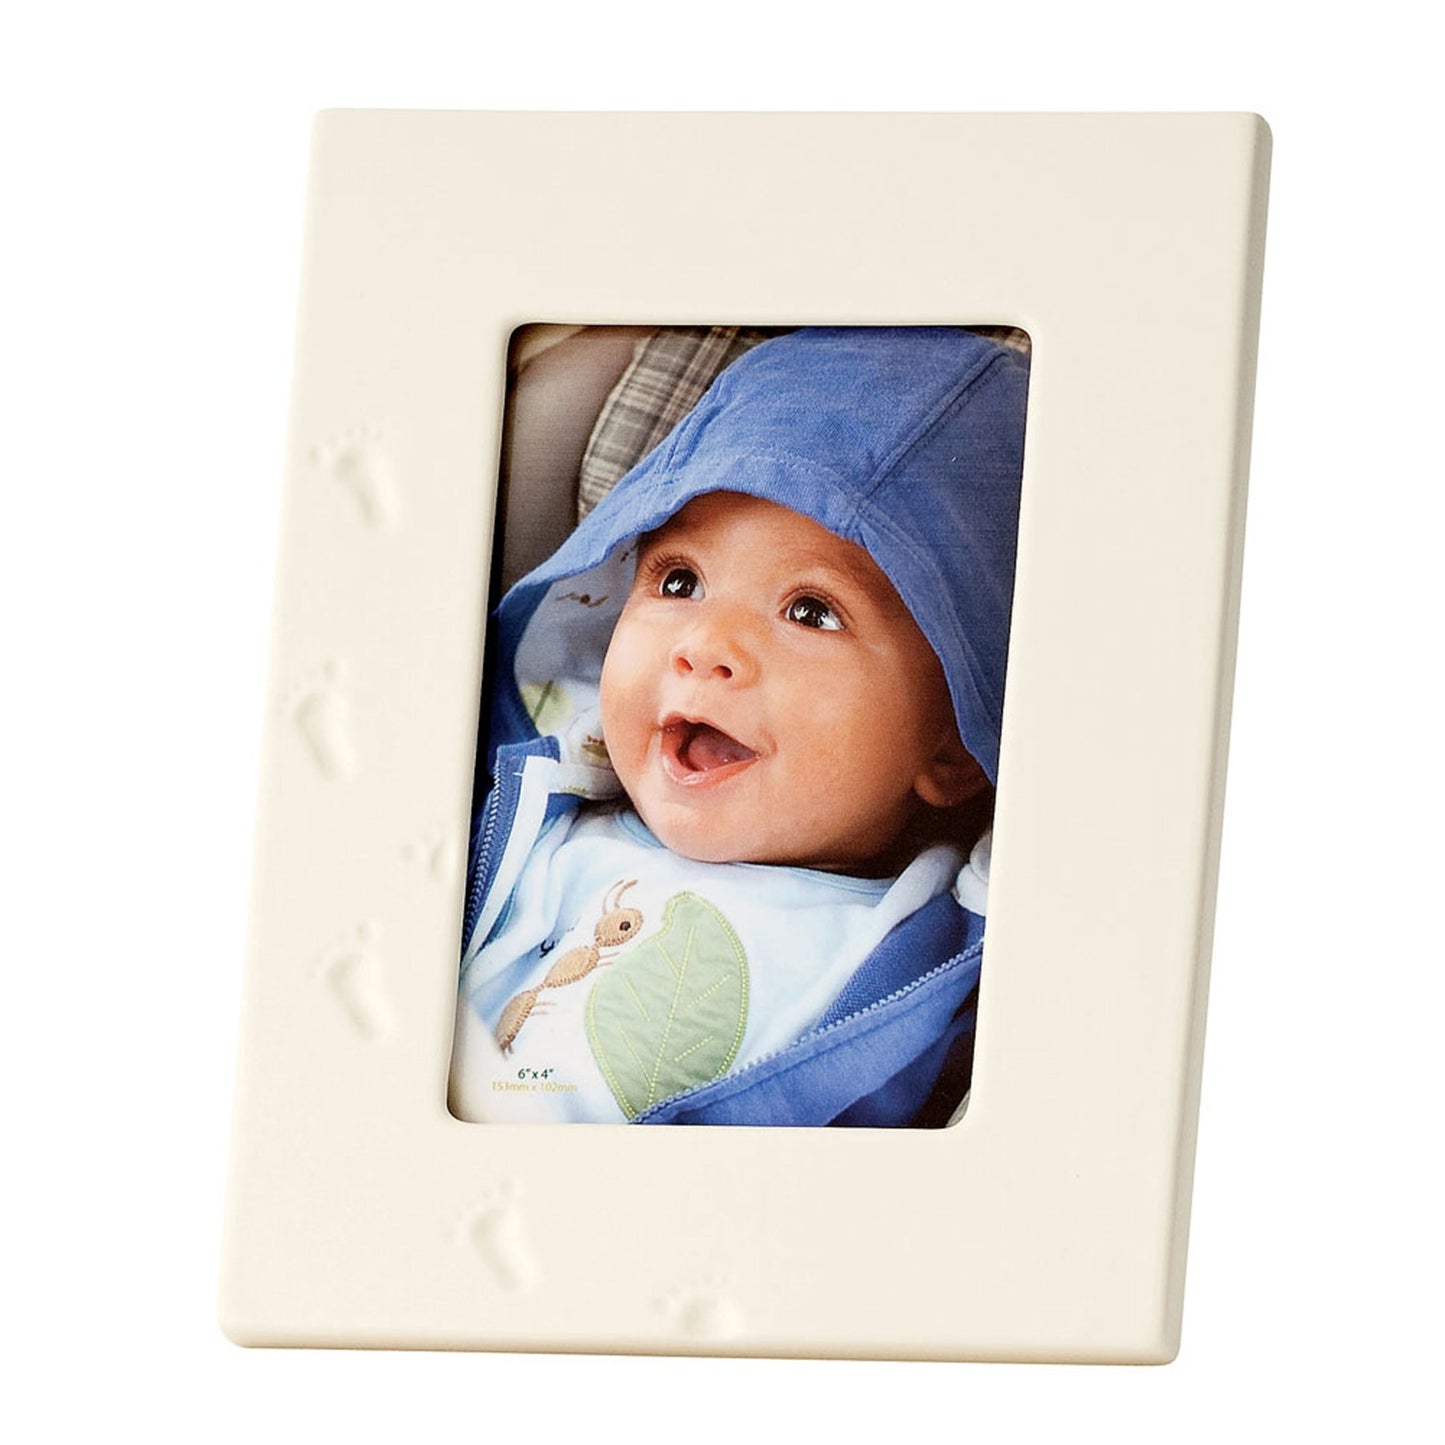 Belleek Precious Memories Frame - Baby Boy, Blue, China, 8.75" x 0.5" x 7"